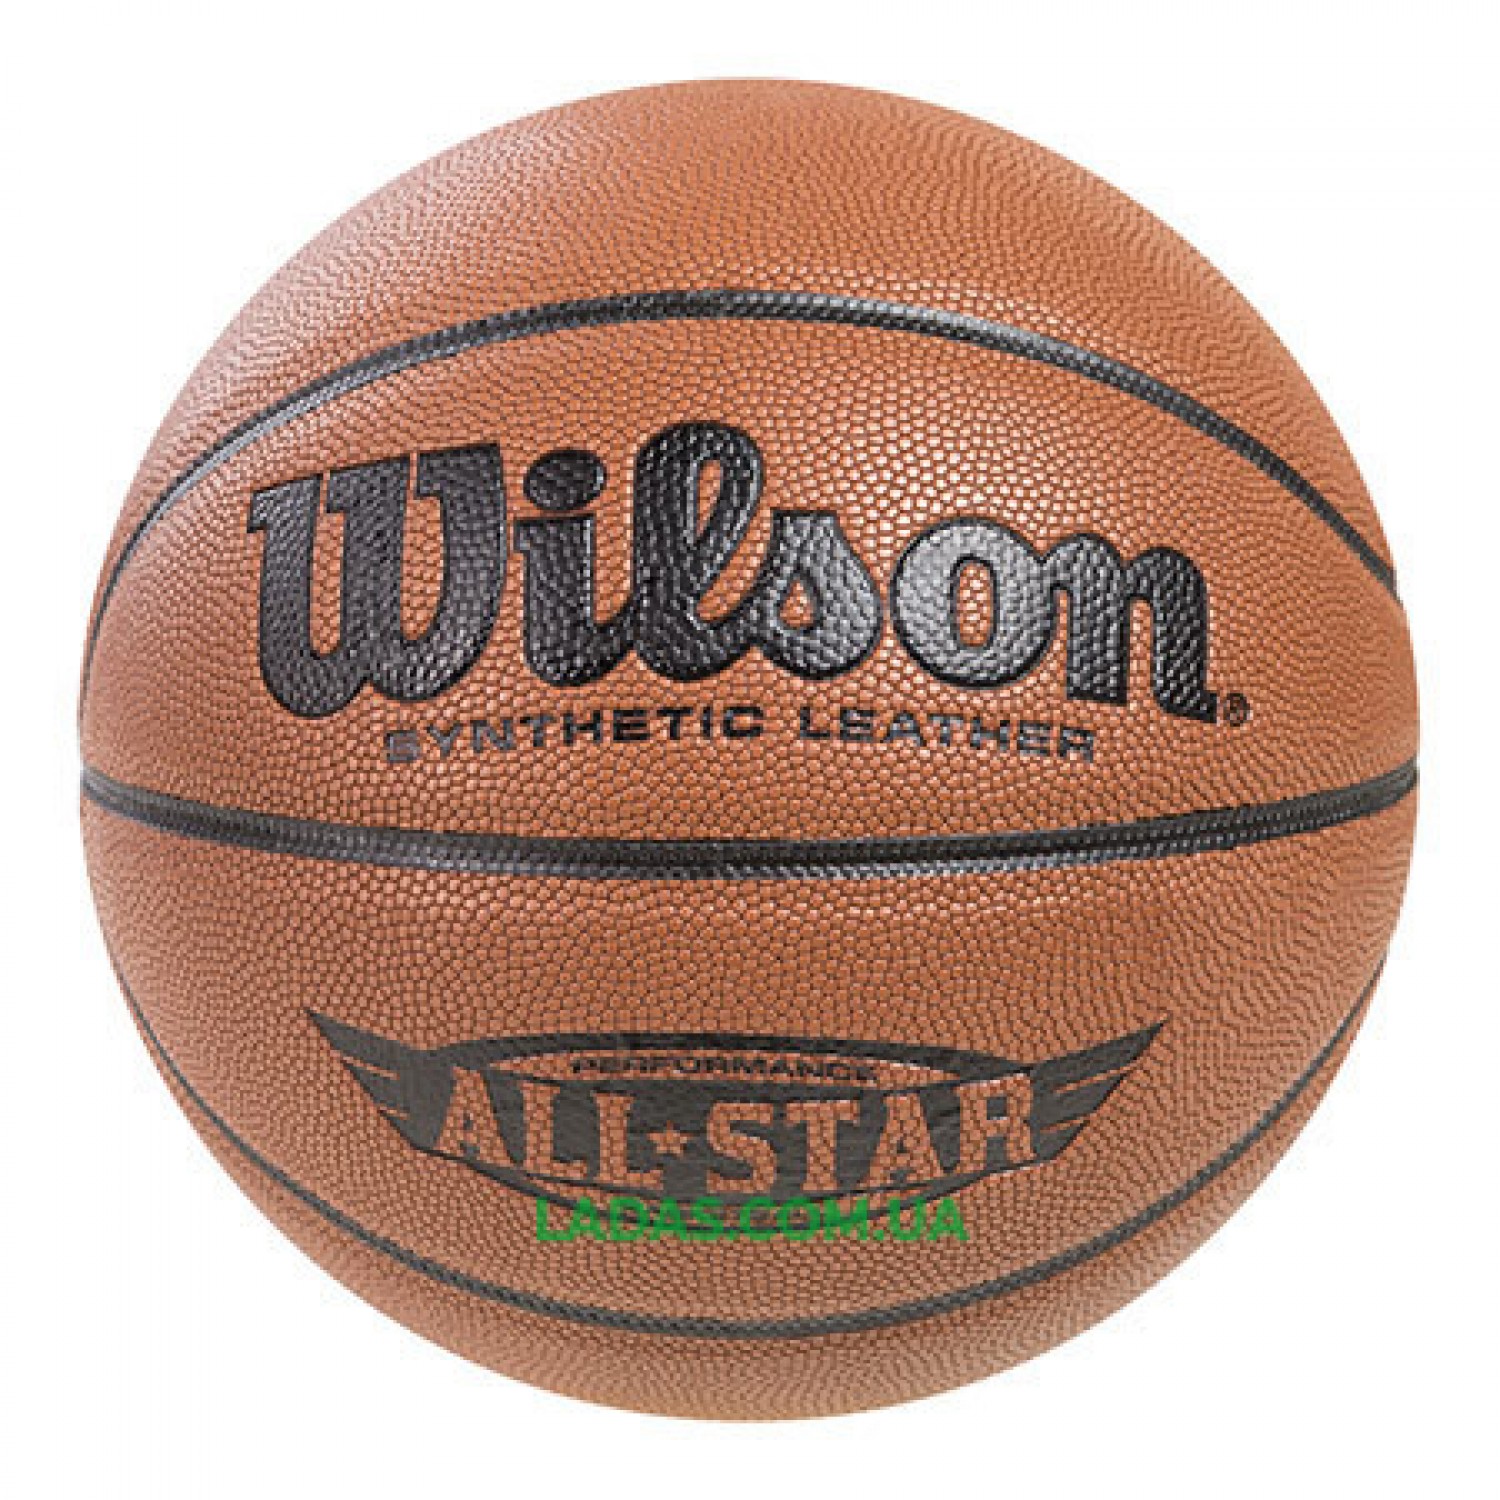 Мяч баскетбольный Wilson AllStar №7 (PU, коричневый)